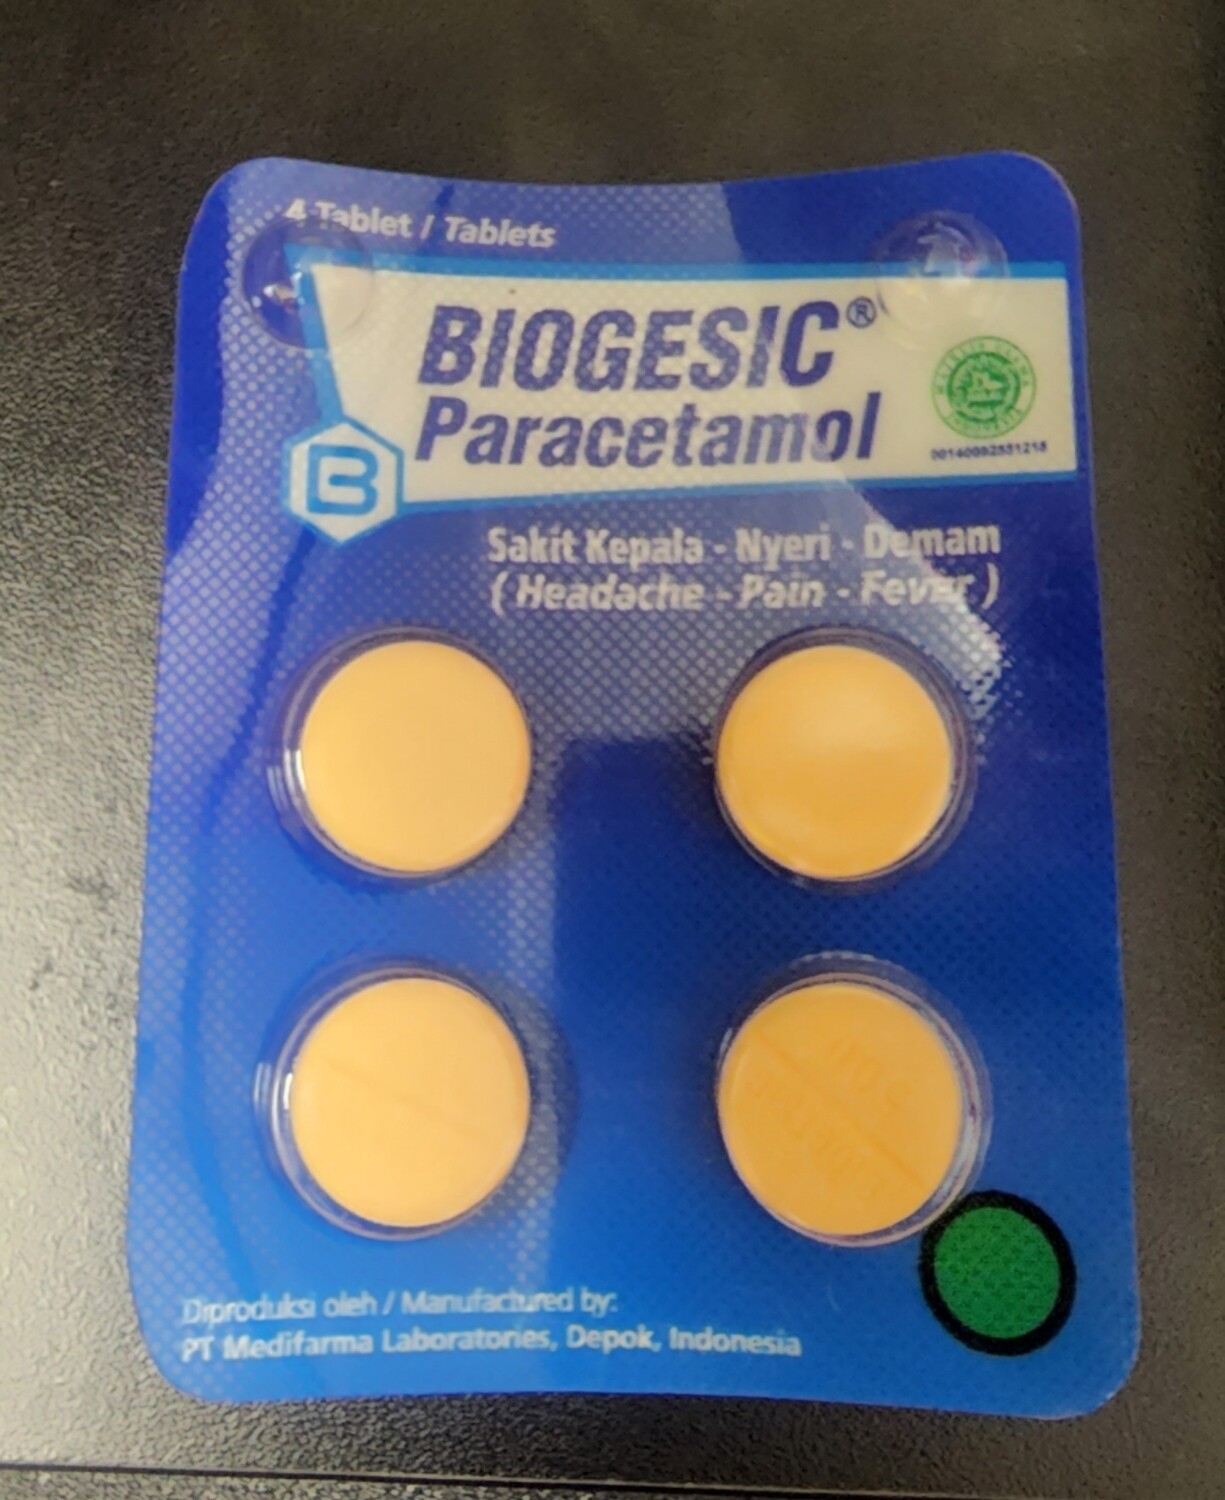 Biogesic Paracetamol 4 tablets